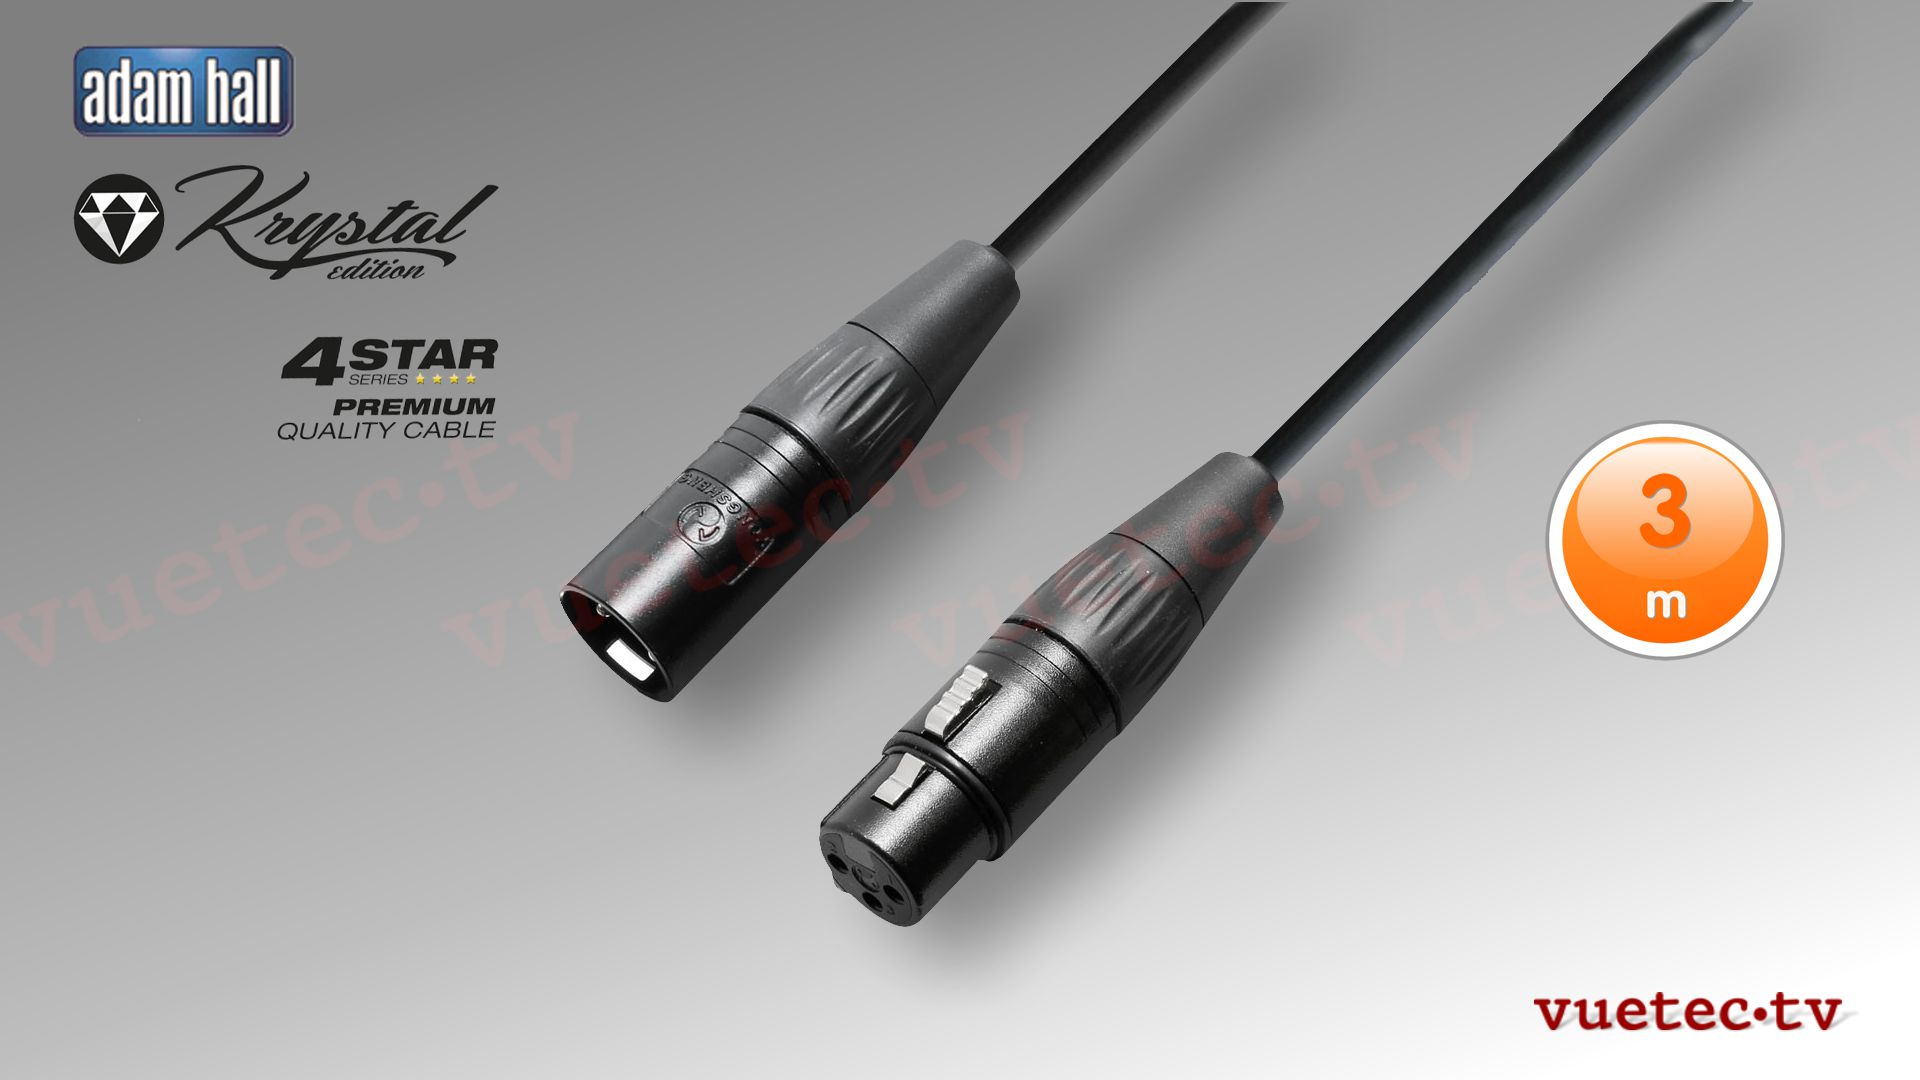 Neutrik 0,5 m ADAM HALL Mikrofonkabel schwarz 3 pol XLR Neutrik kompatibel DMX Kabel 